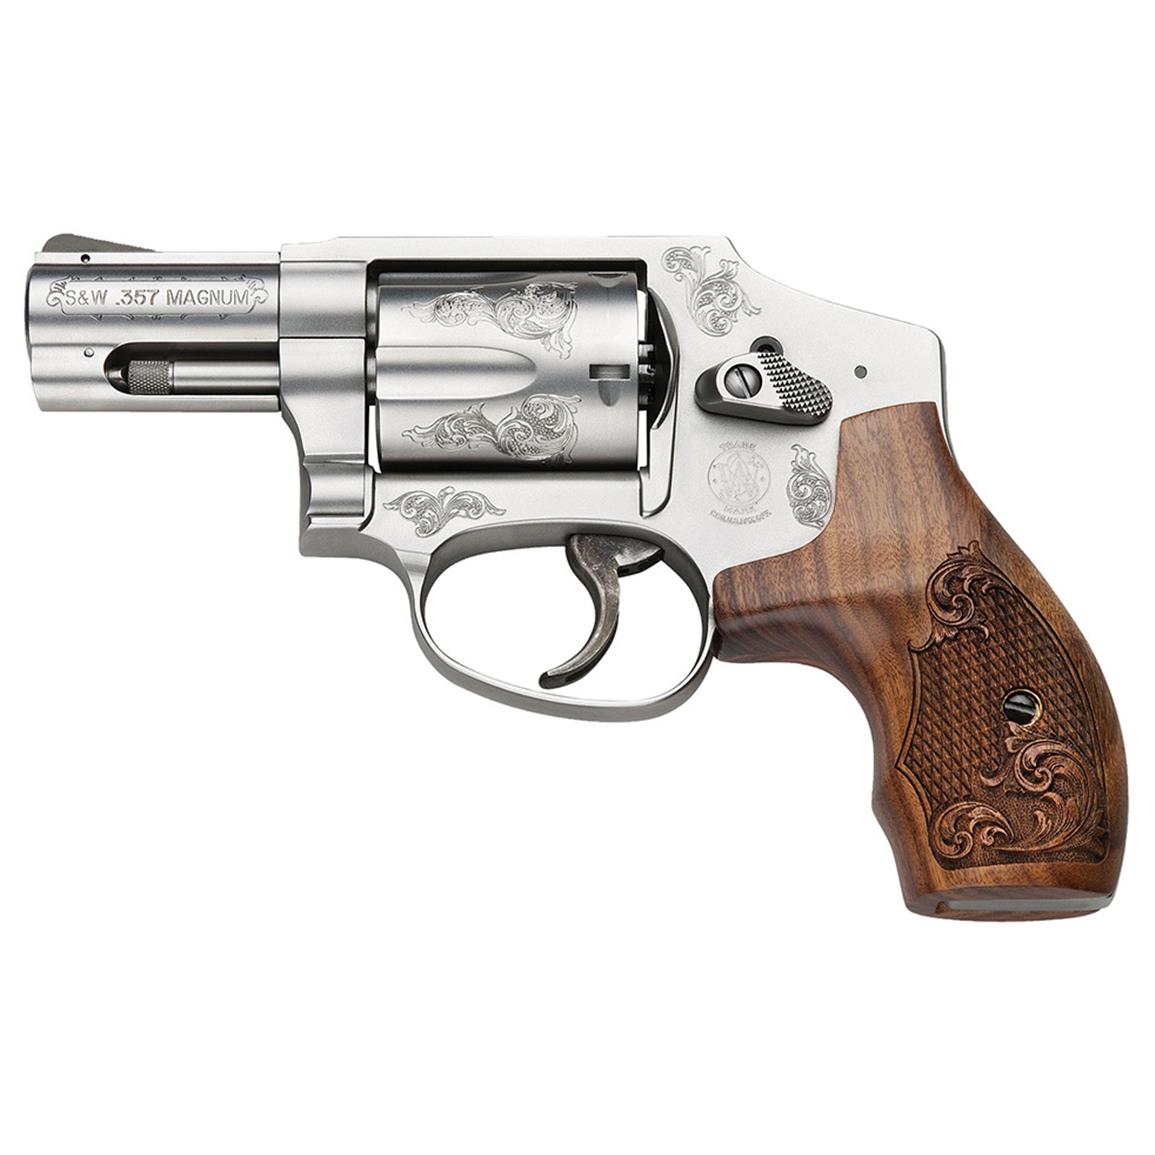 High Resolution Wallpaper | Smith & Wesson 357 Magnum Revolver 1155x1155 px